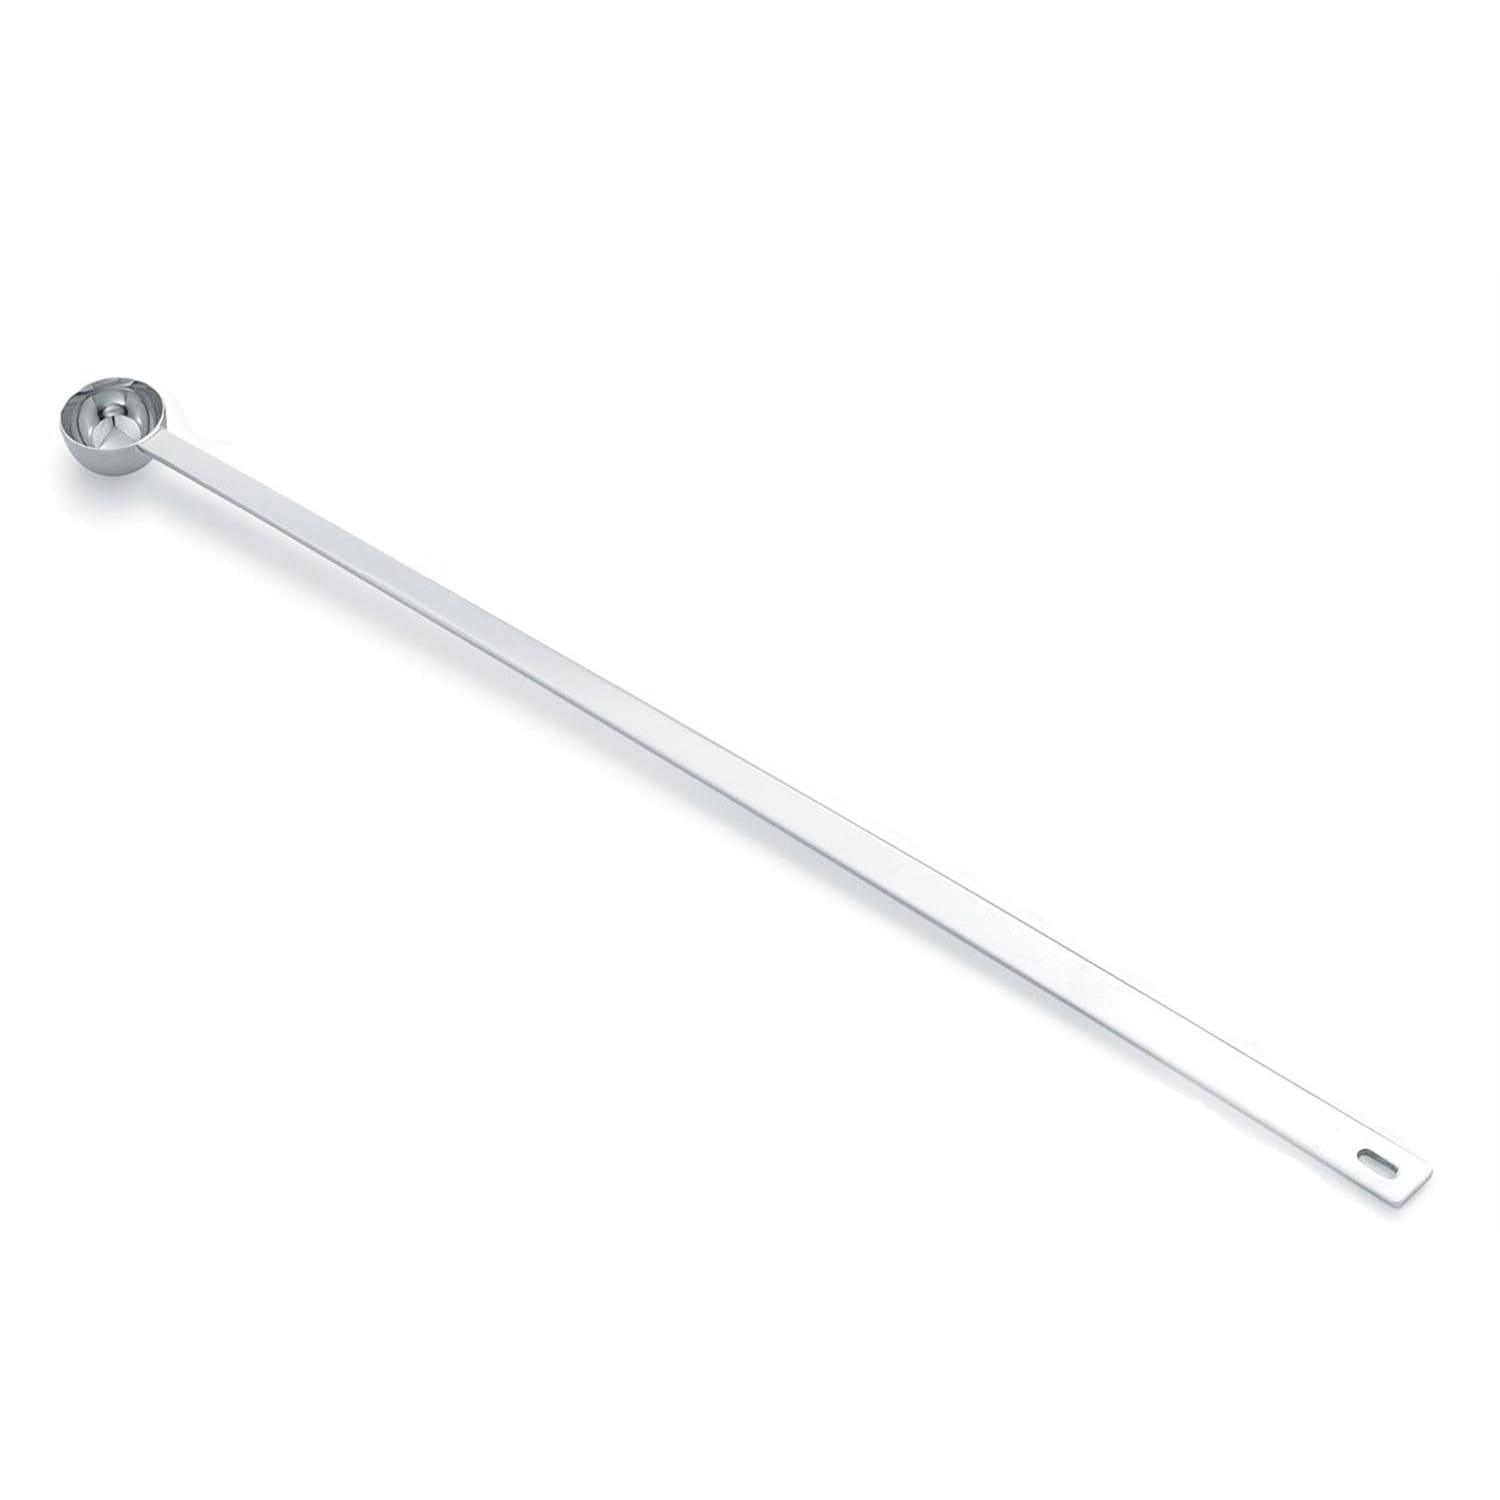 Vollrath 1-teaspoon round heavy-duty stainless steel measuring spoon -  #47075 - 24 per case